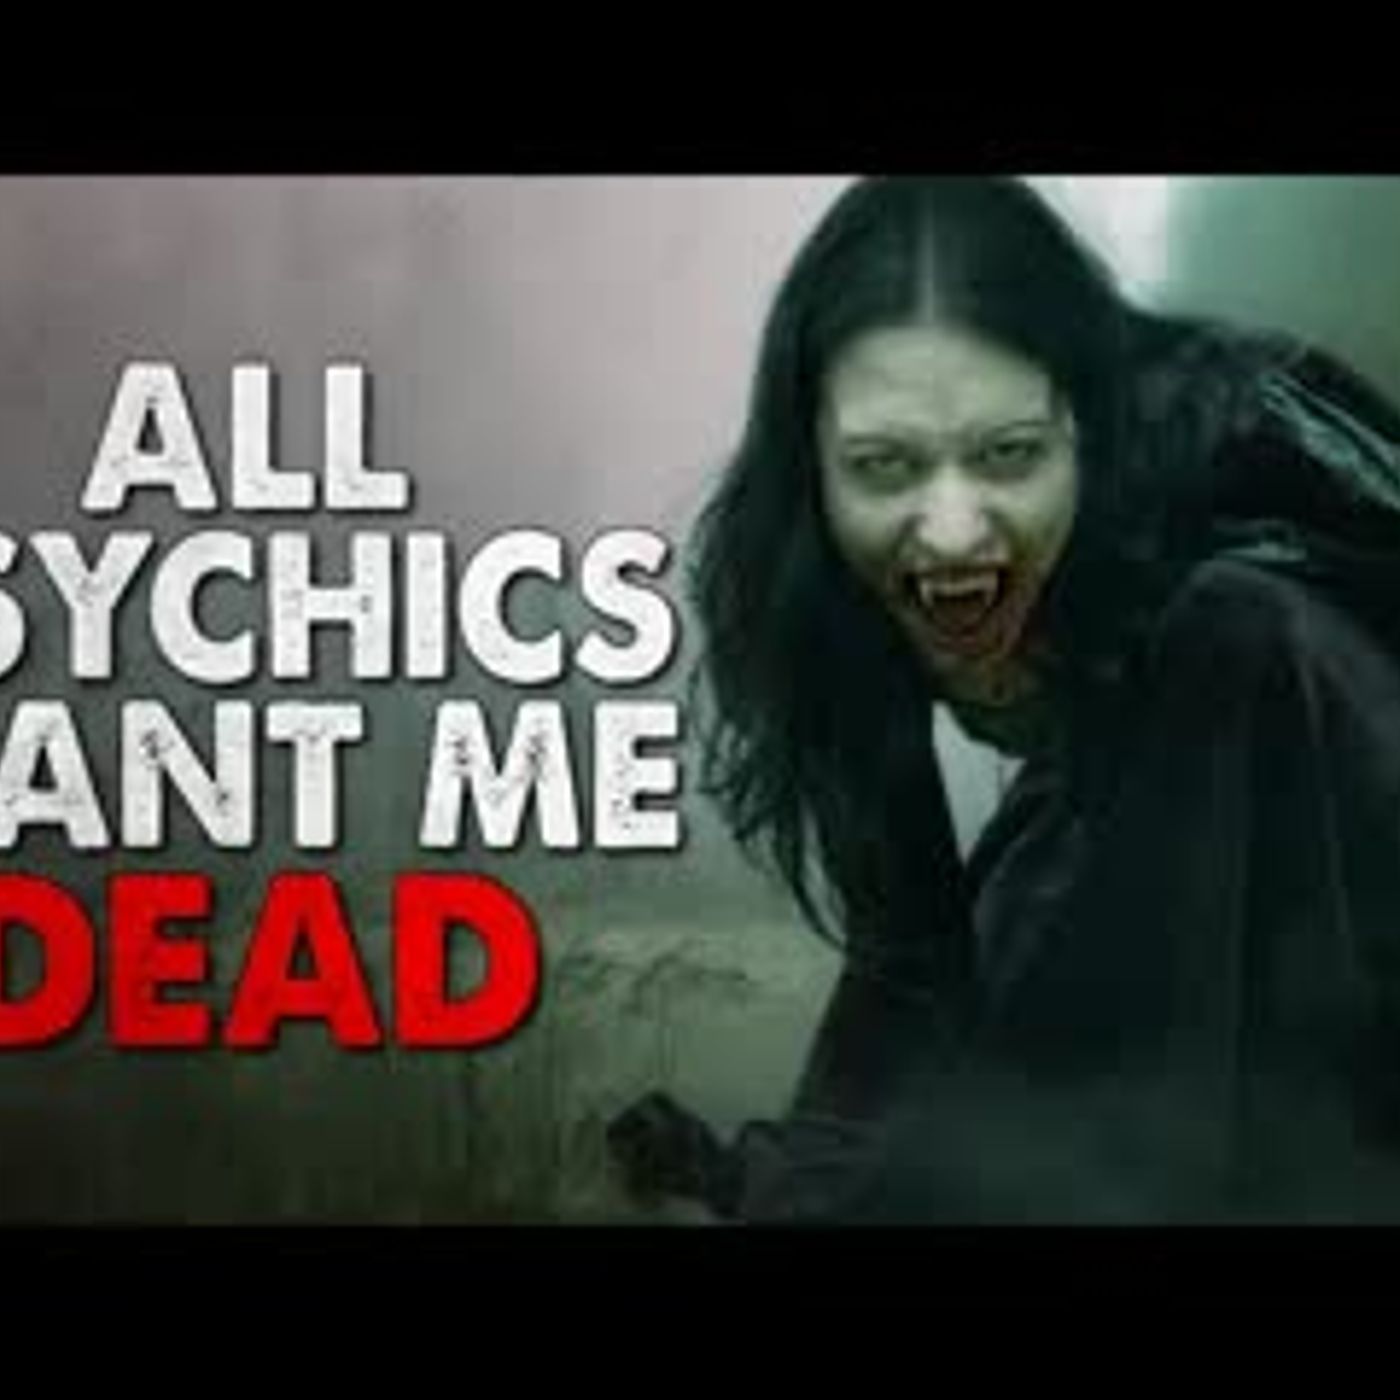 "All the psychics want me dead" Creepypasta